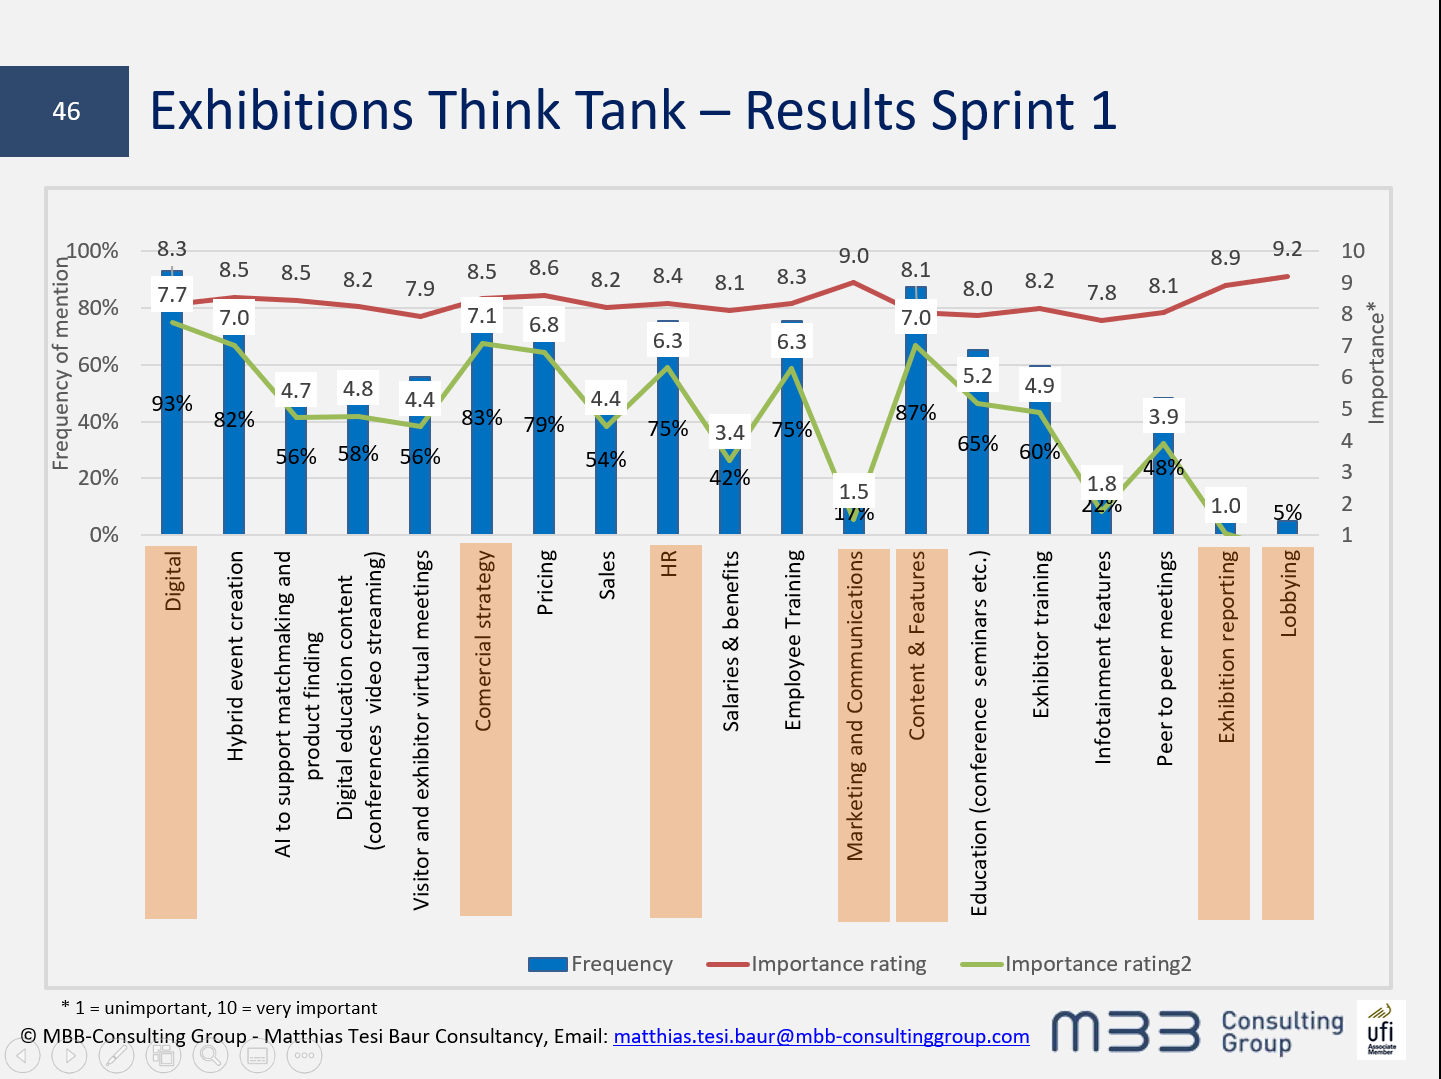 Exhibition Think Tank - Results Sprint 1 Slide 2